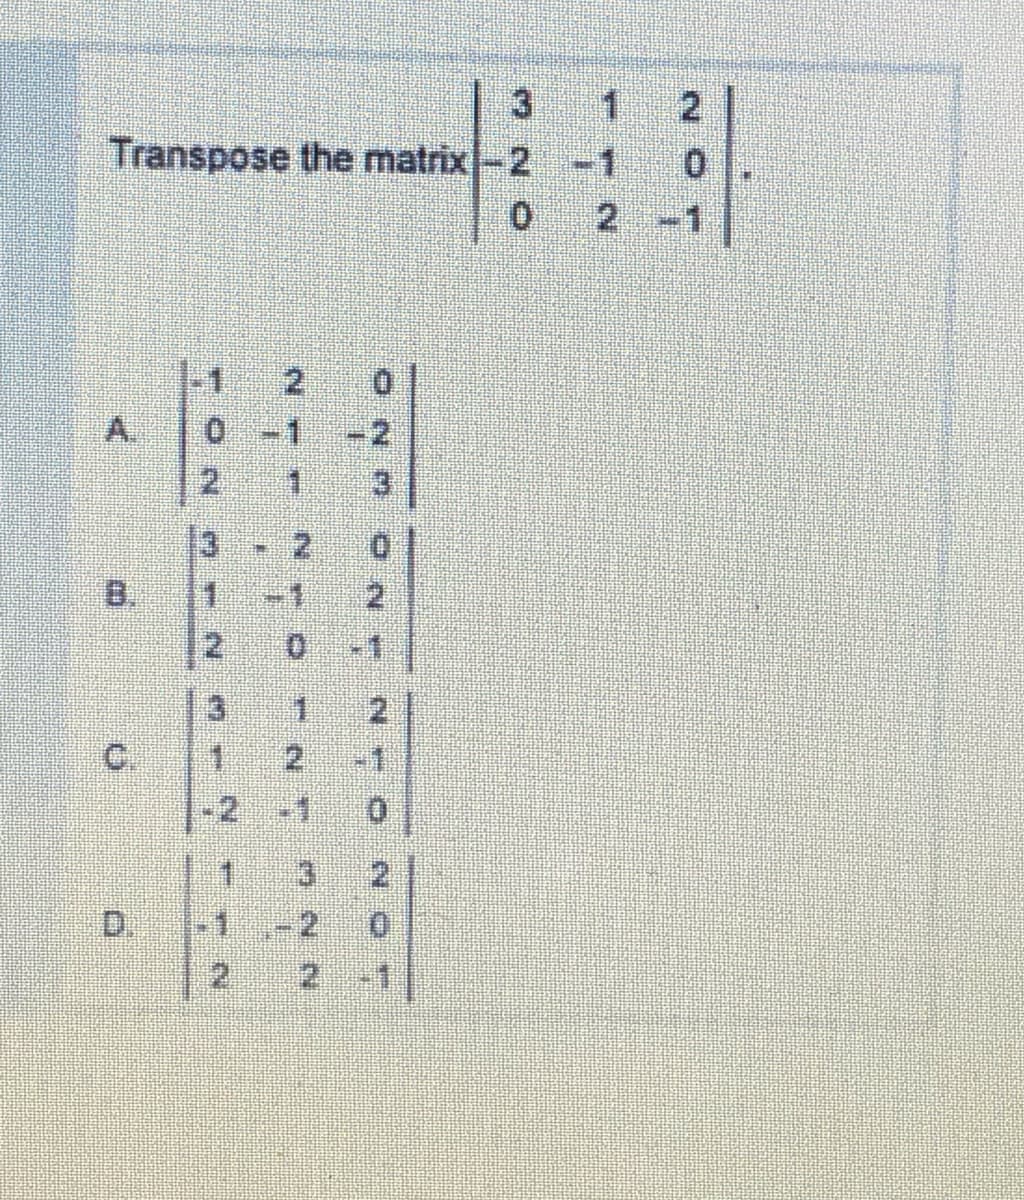 3
Transpose the matrix-2 -1 0
-1
-1
2
A.
2
2.
1.
3
2,
B.
2
-1
3.
2
2
-2 1
1.
3.
2.
D.
1-1,
2
2
21
2.
3.
